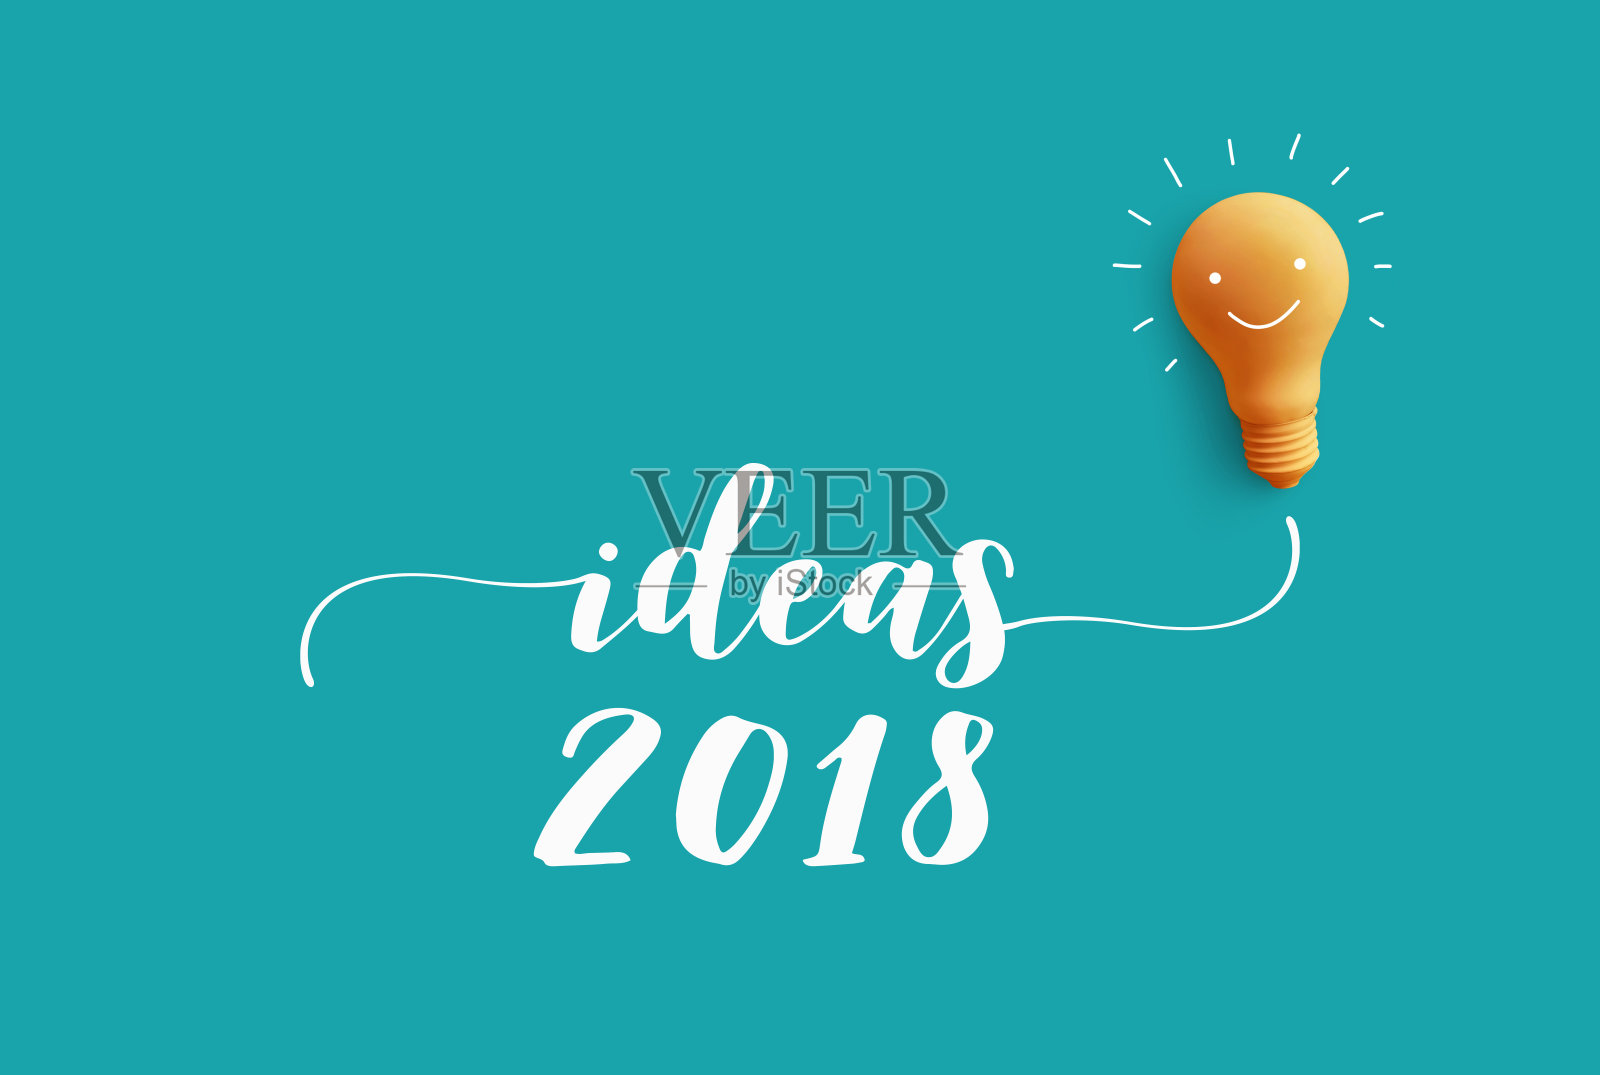 IDEAS 2018关于灯泡的信息。业务创新的想法照片摄影图片